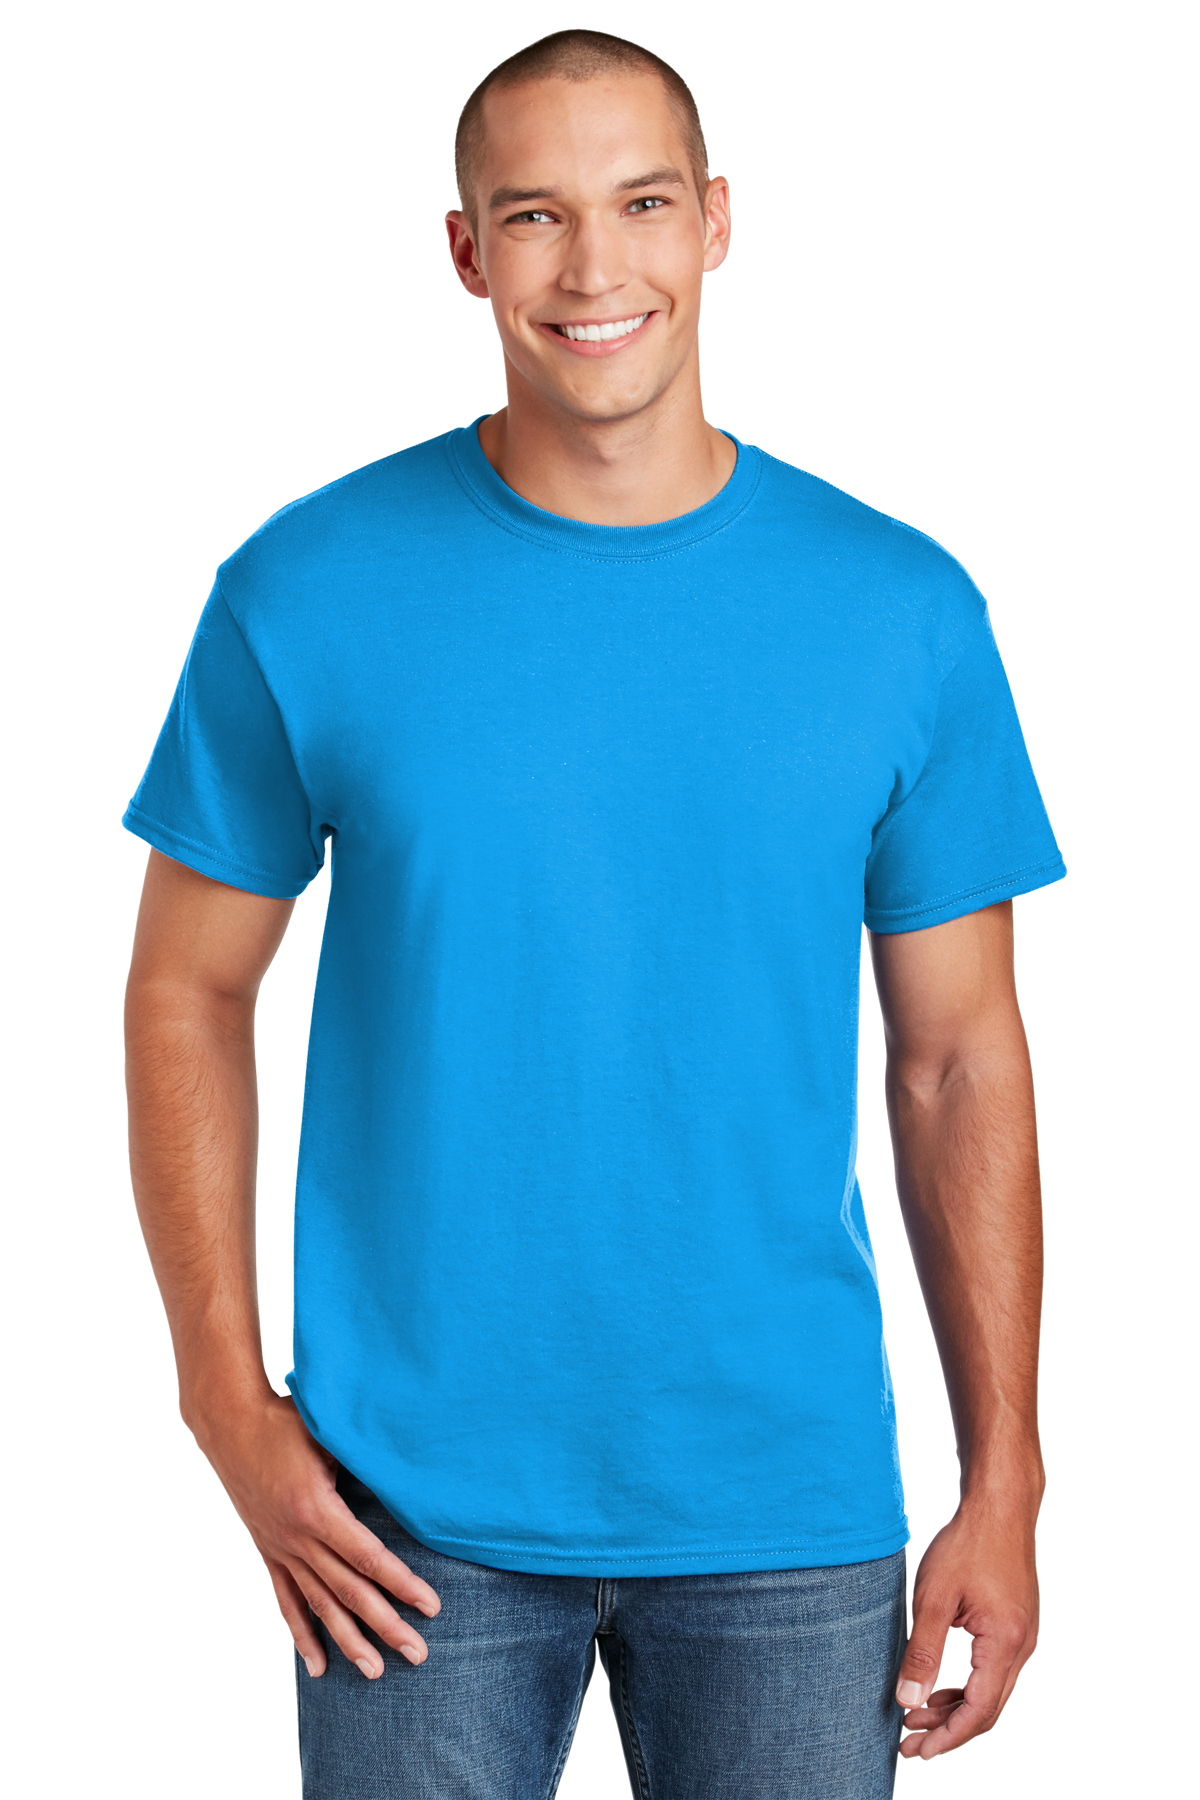 - | Casuals Poly Product Cotton/50 T-Shirt Company DryBlend Gildan 50 |